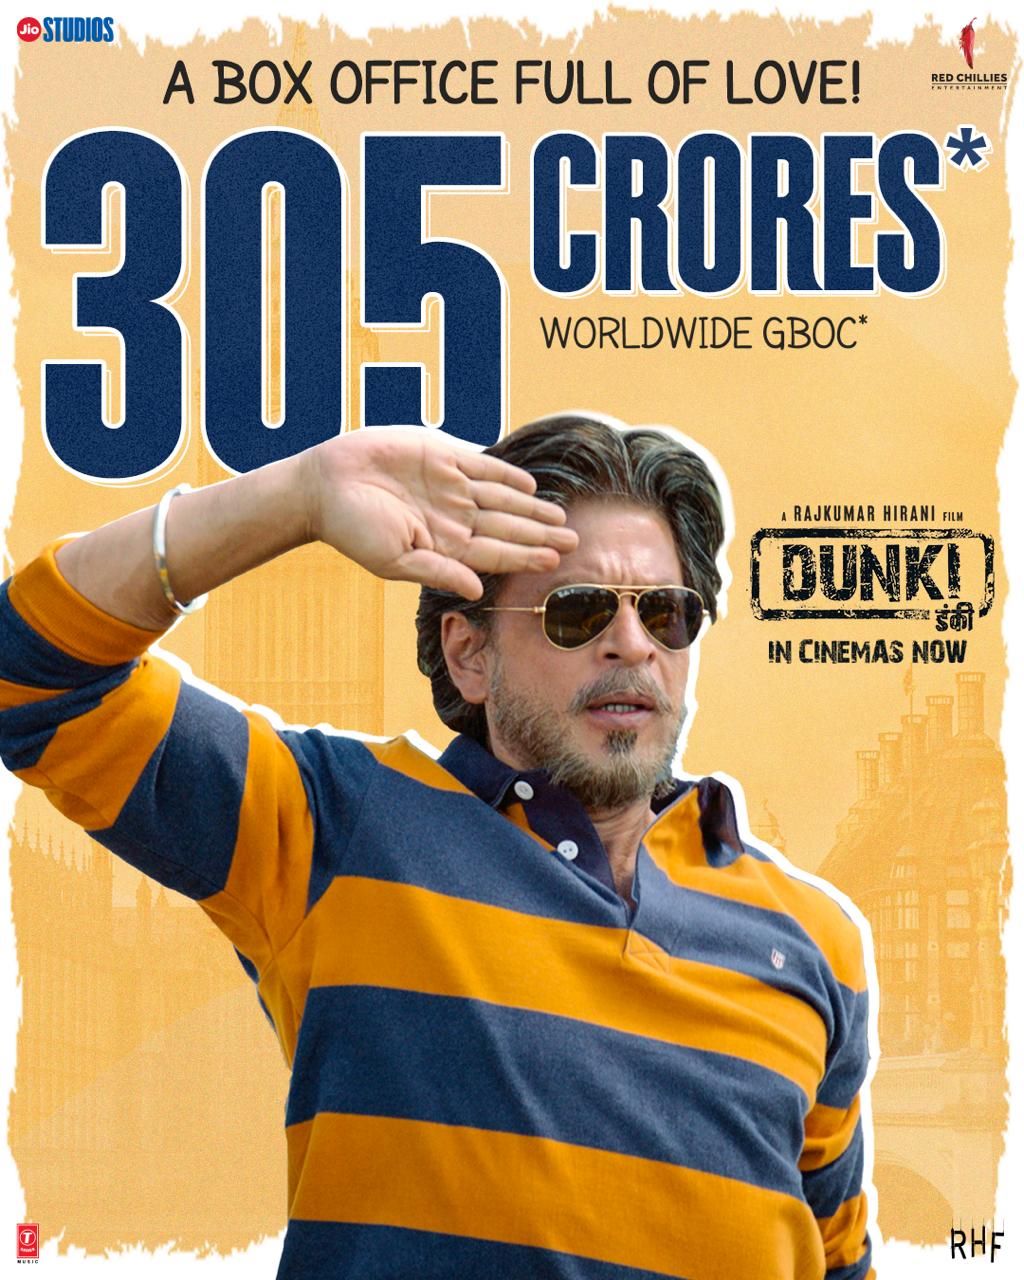 Dunki Movie Crosses 300 Crore Mark